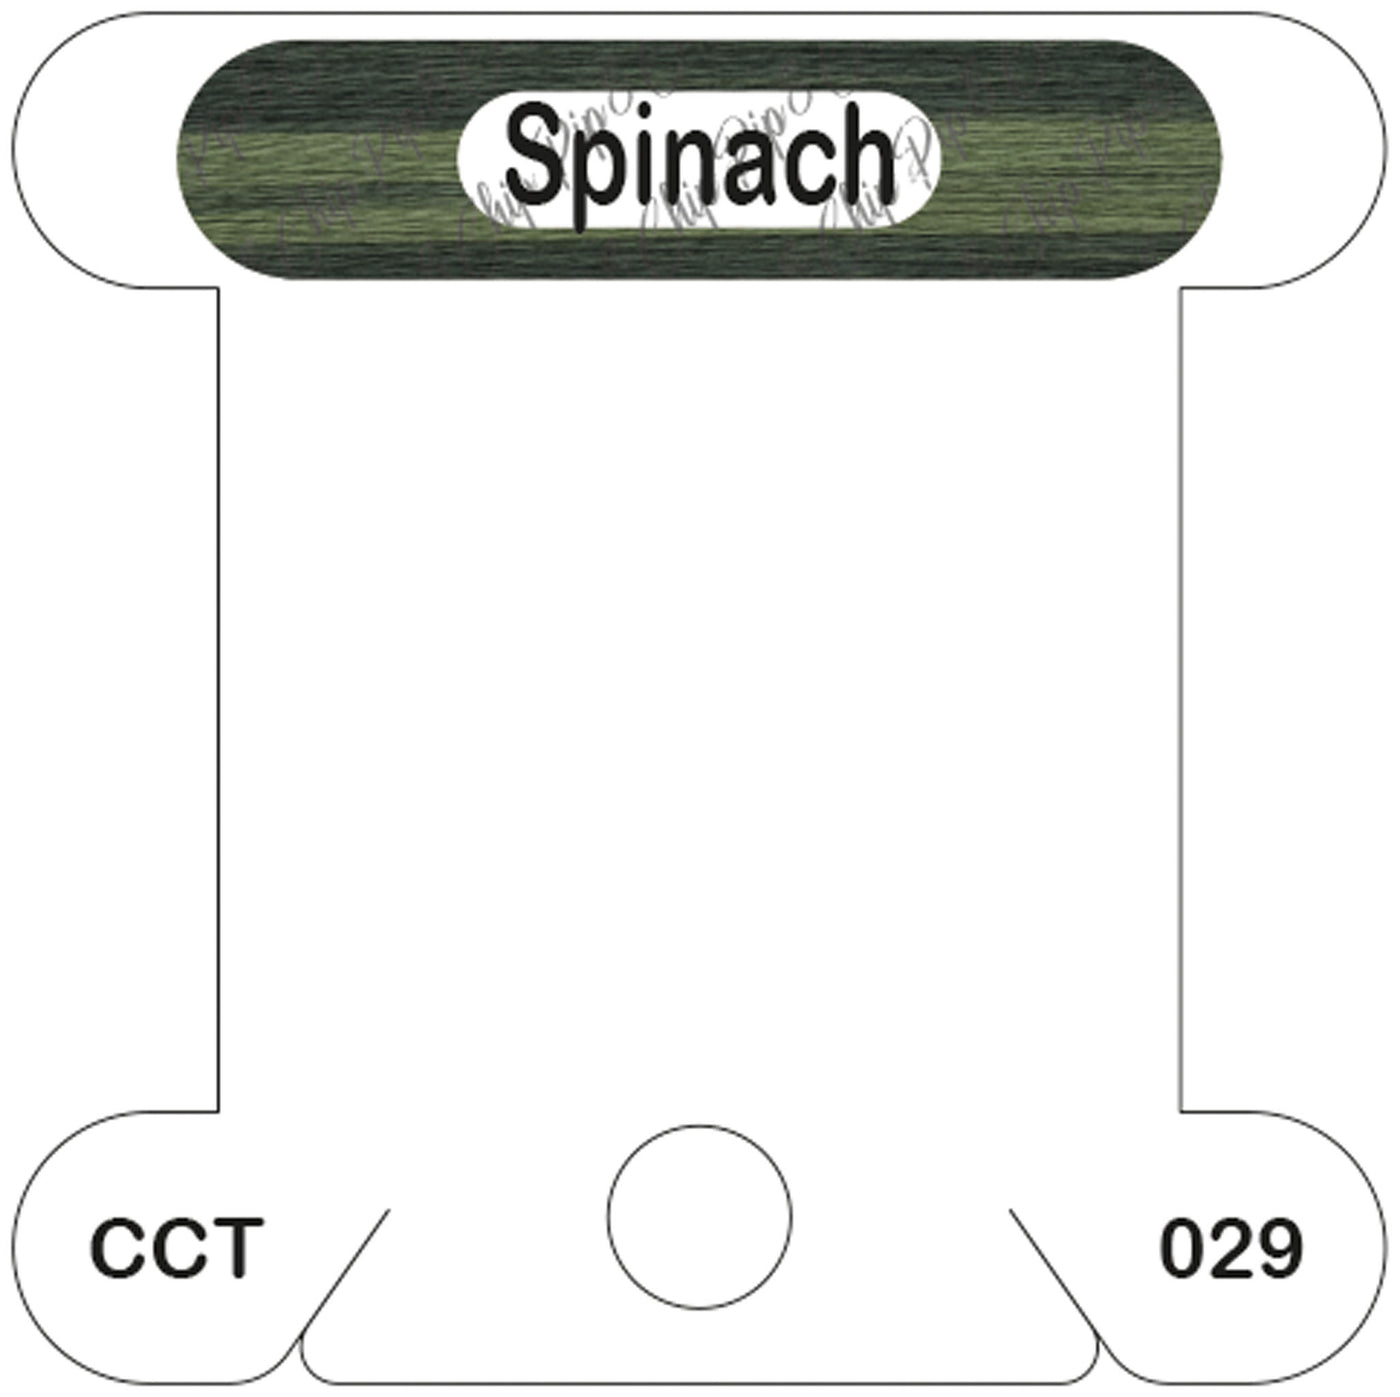 Classic Colorworks Spinach acrylic bobbin